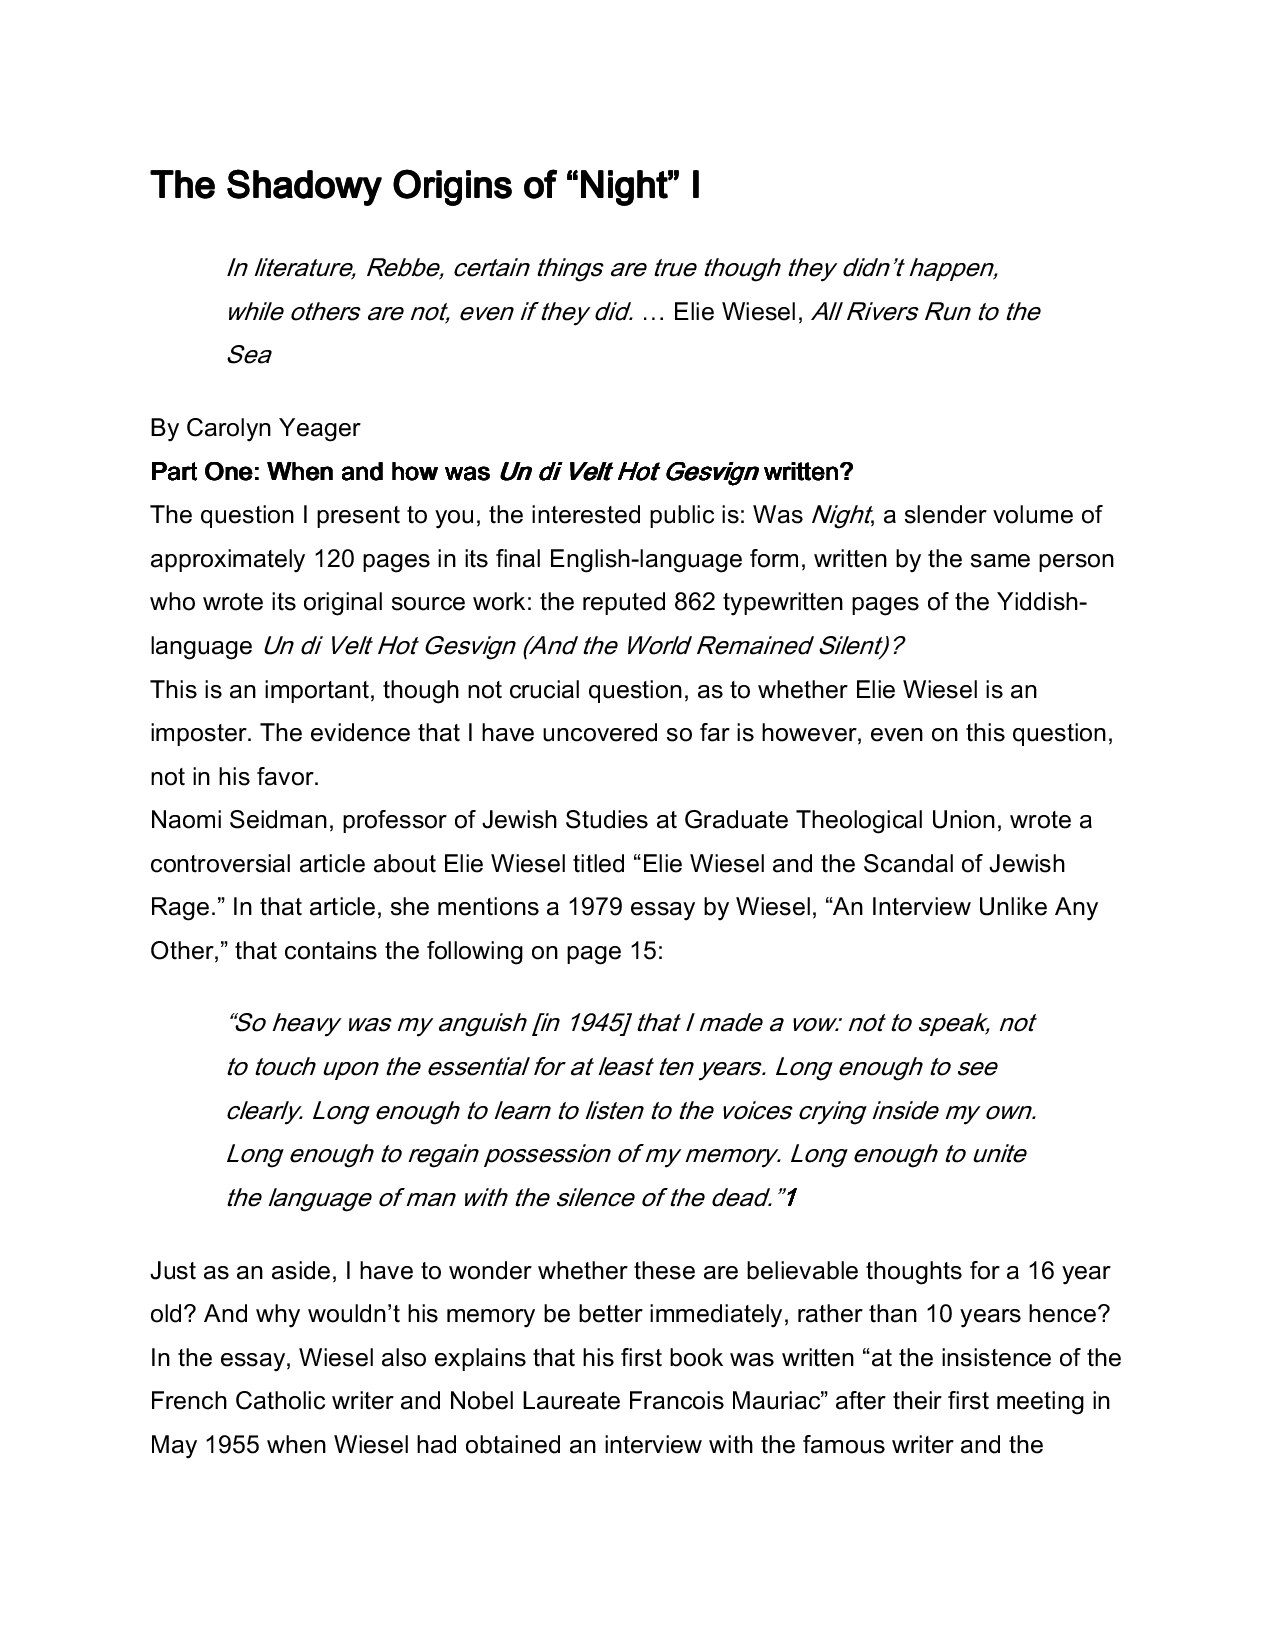 Microsoft Word - The Shadowy Origins of Elie Weisels Stolen Book 'Night'.doc